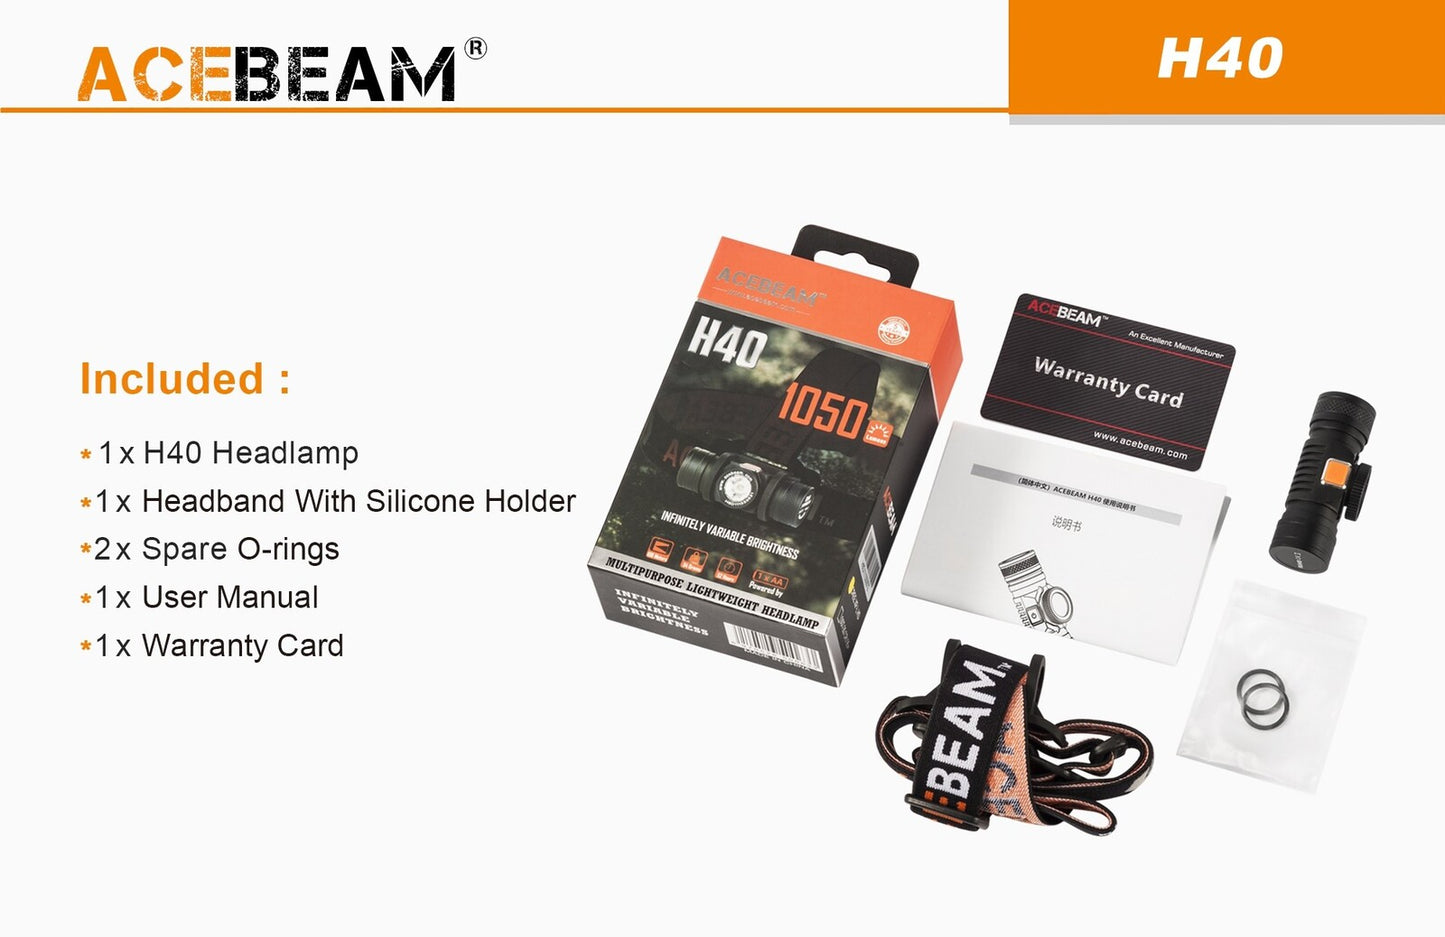 Acebeam Acebeam Multipurpose Lightweight Led Headlamp - 1050 Lumen #h40 Salmon